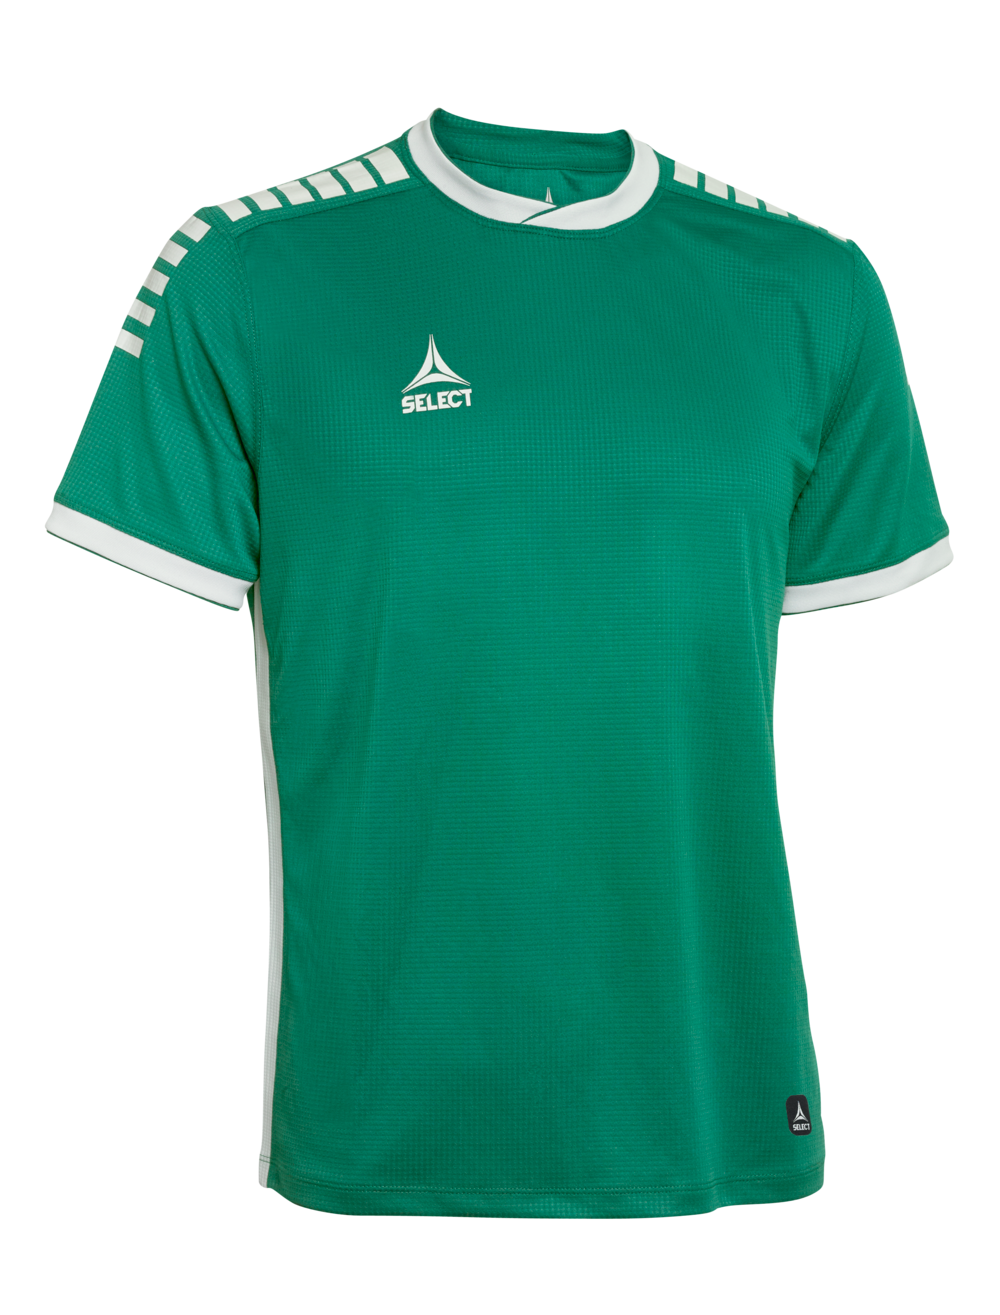 monaco_player_shirt_green